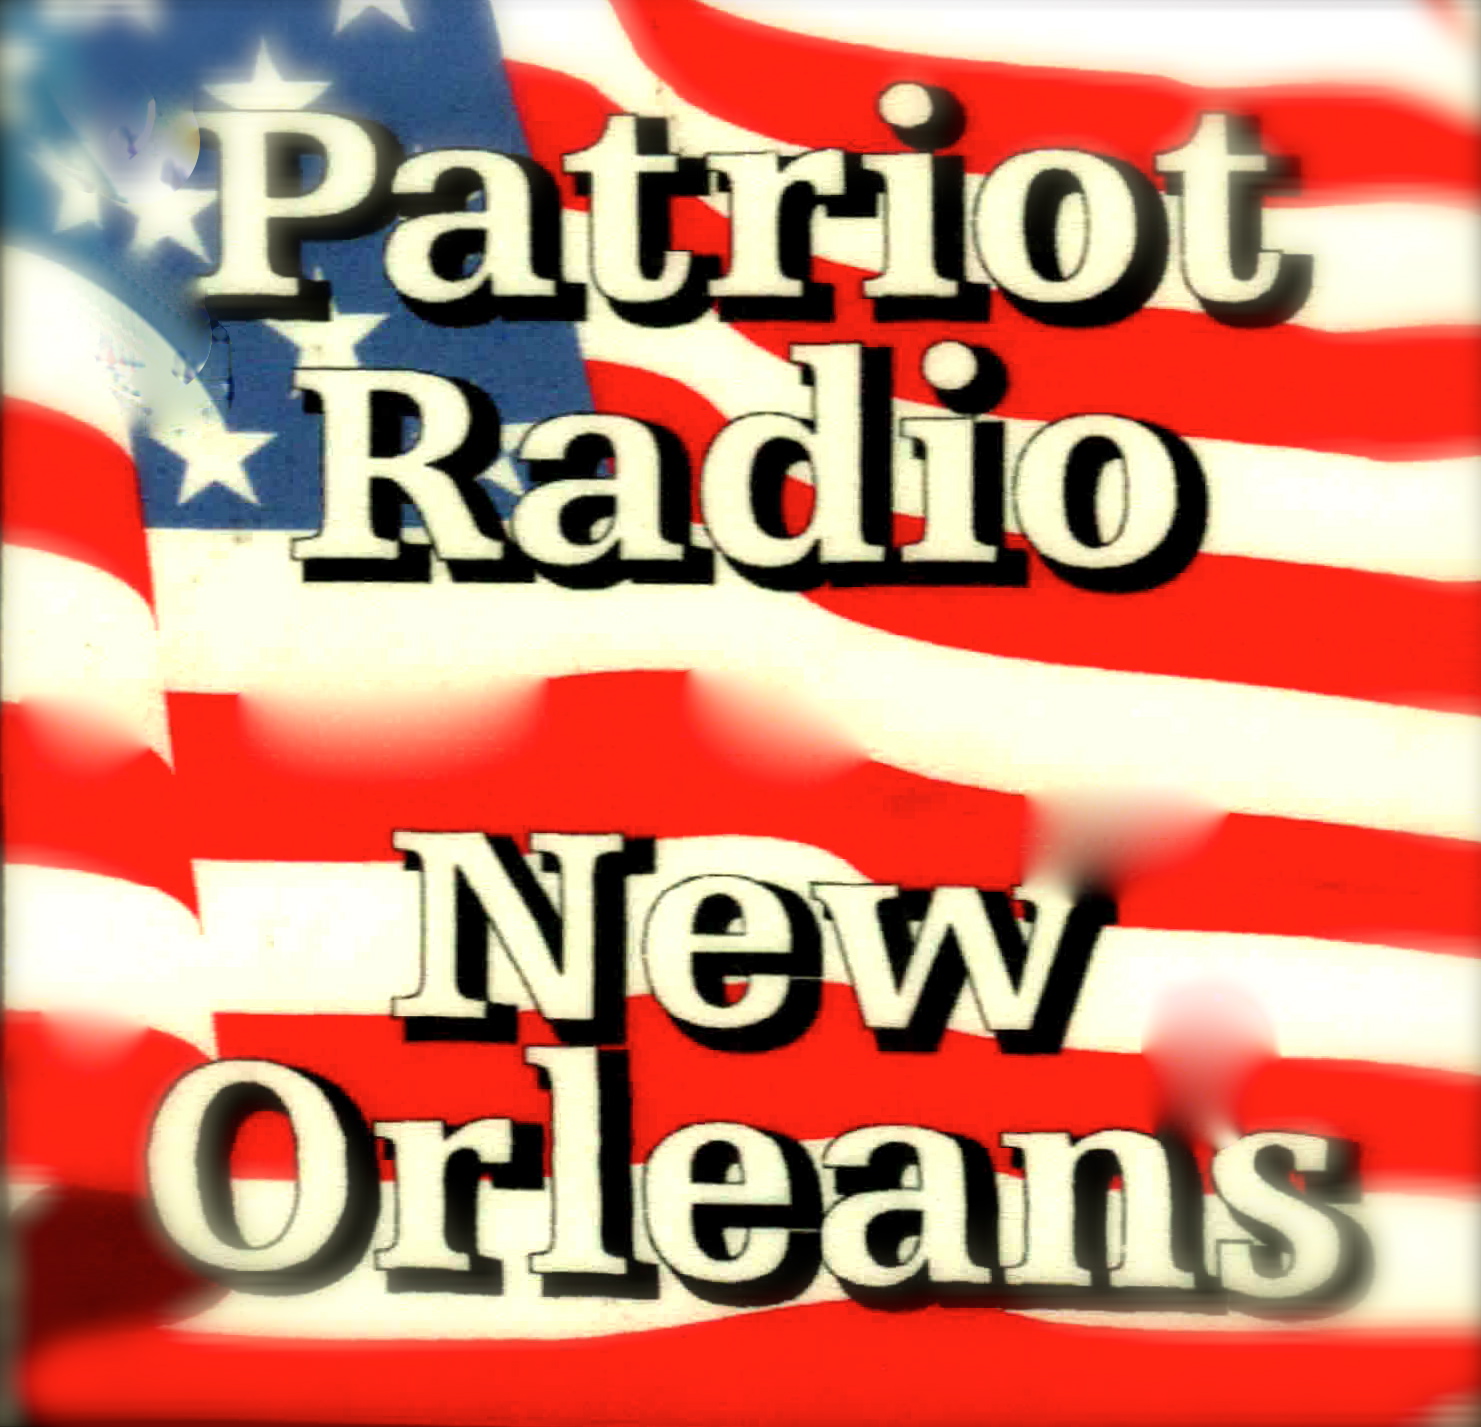  Battle of New Orleans/ NFL Protests 